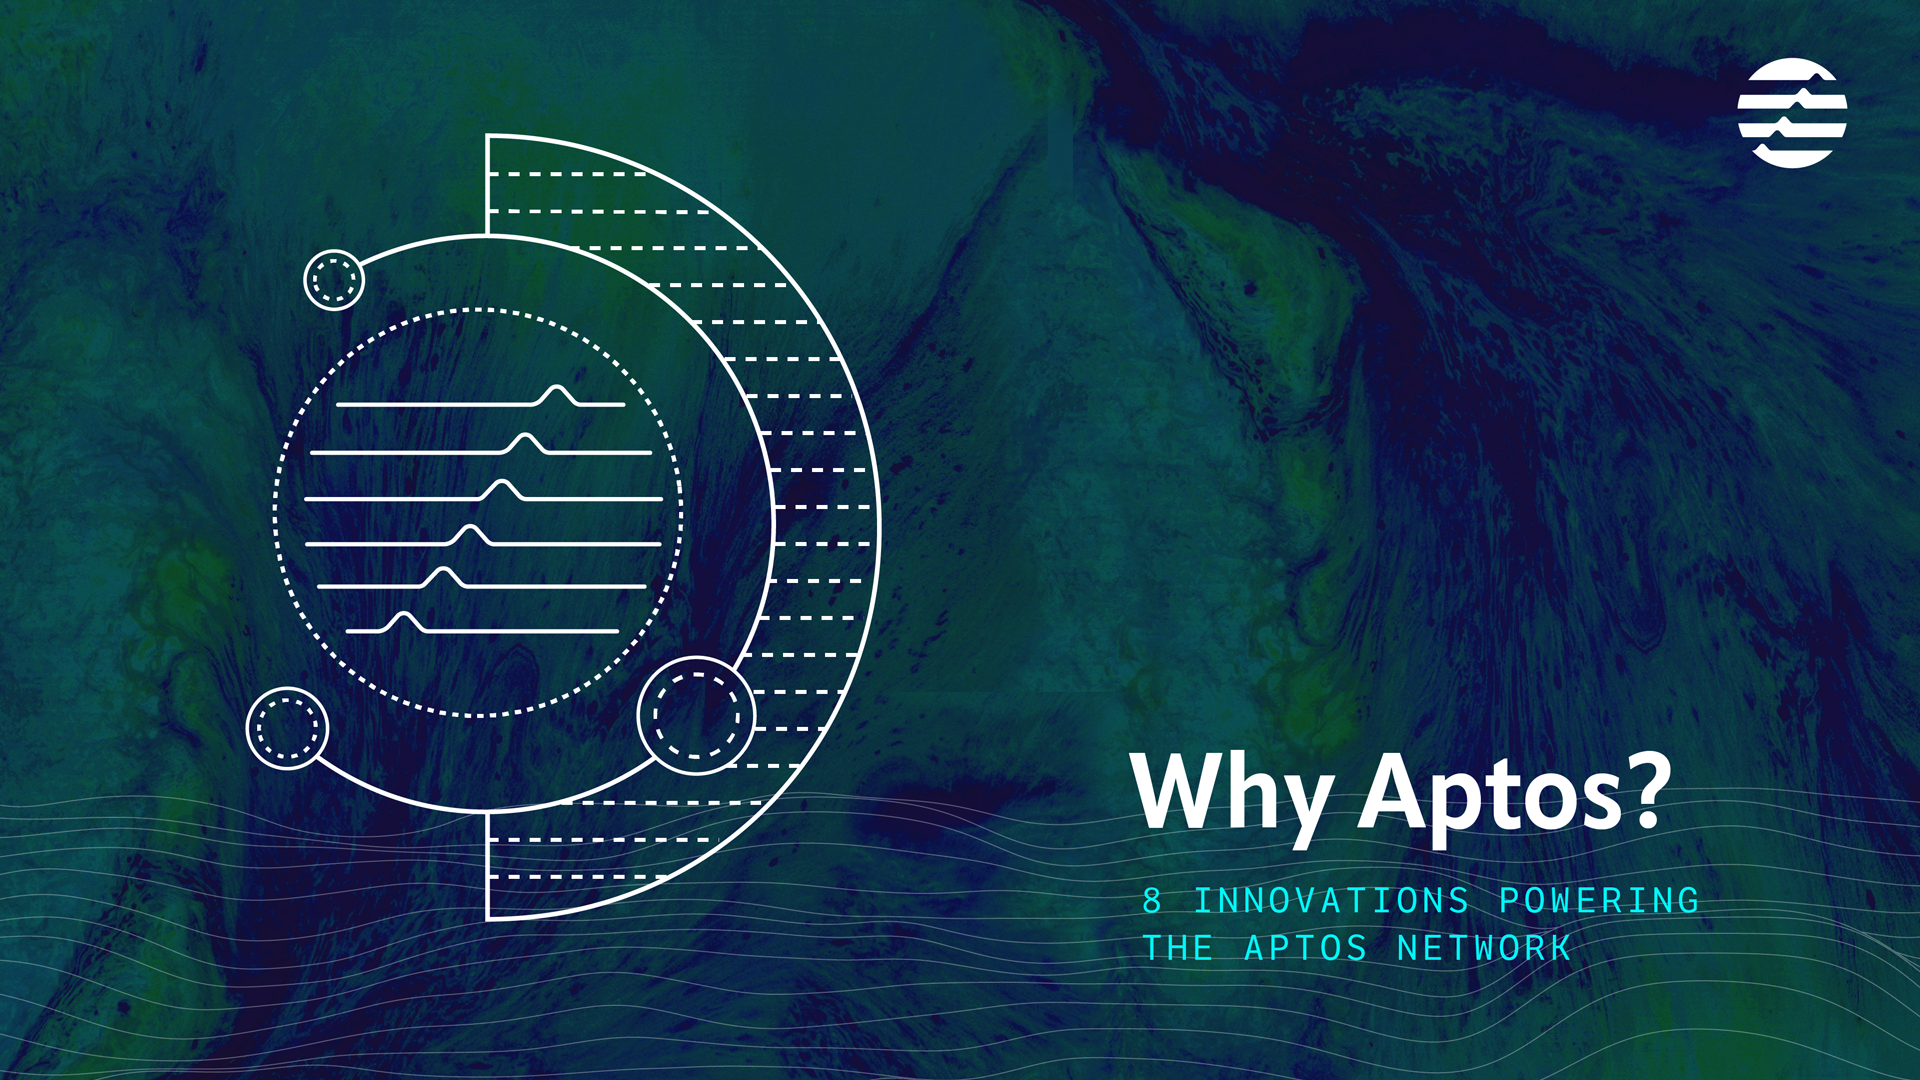 Why Aptos? 8 Innovations Powering the Aptos Network poster artwork